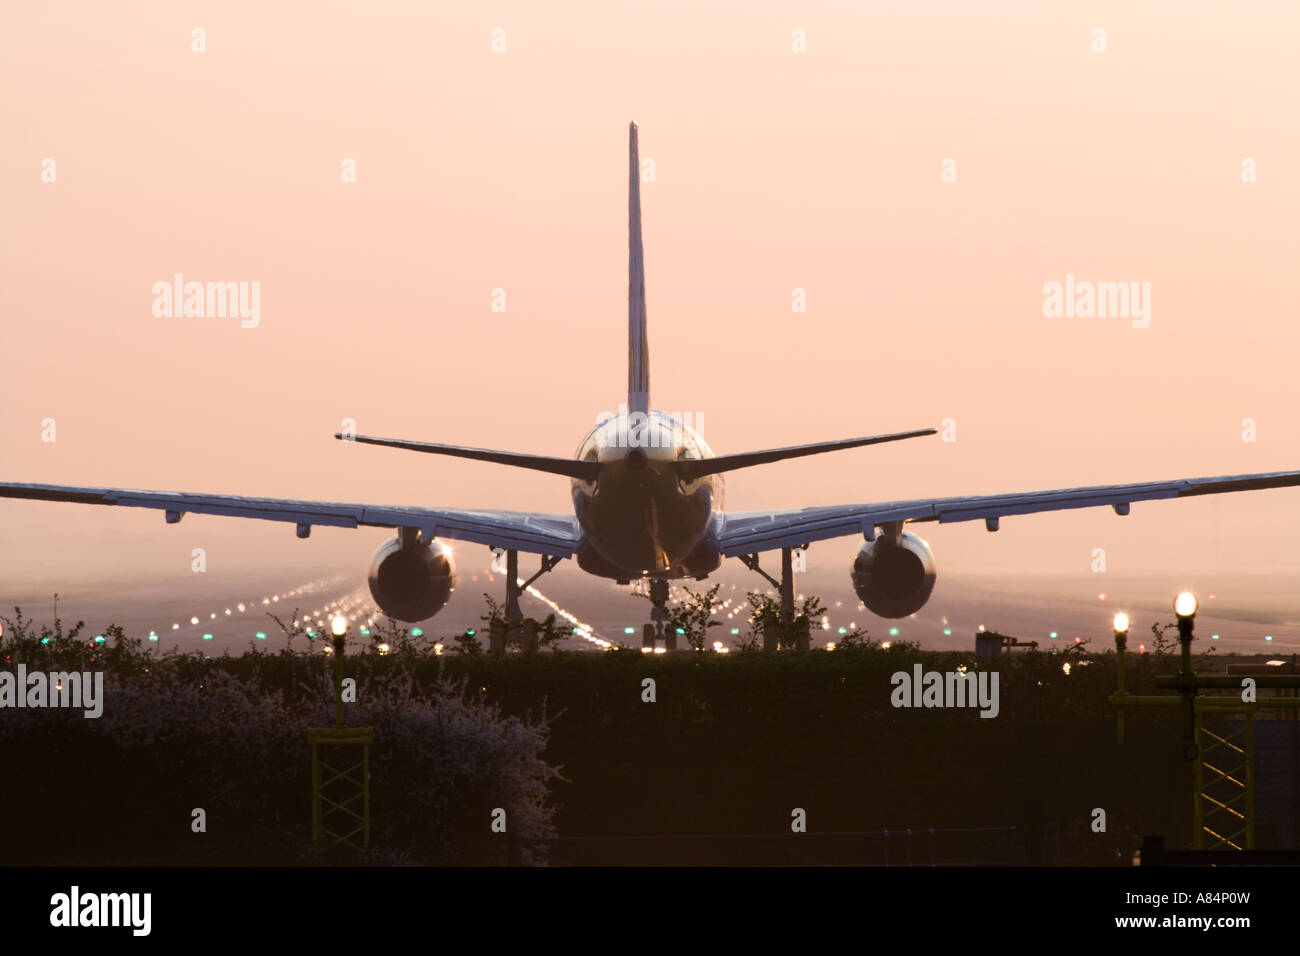 Aeroplane awaiting takeoff on runway Stock Photo